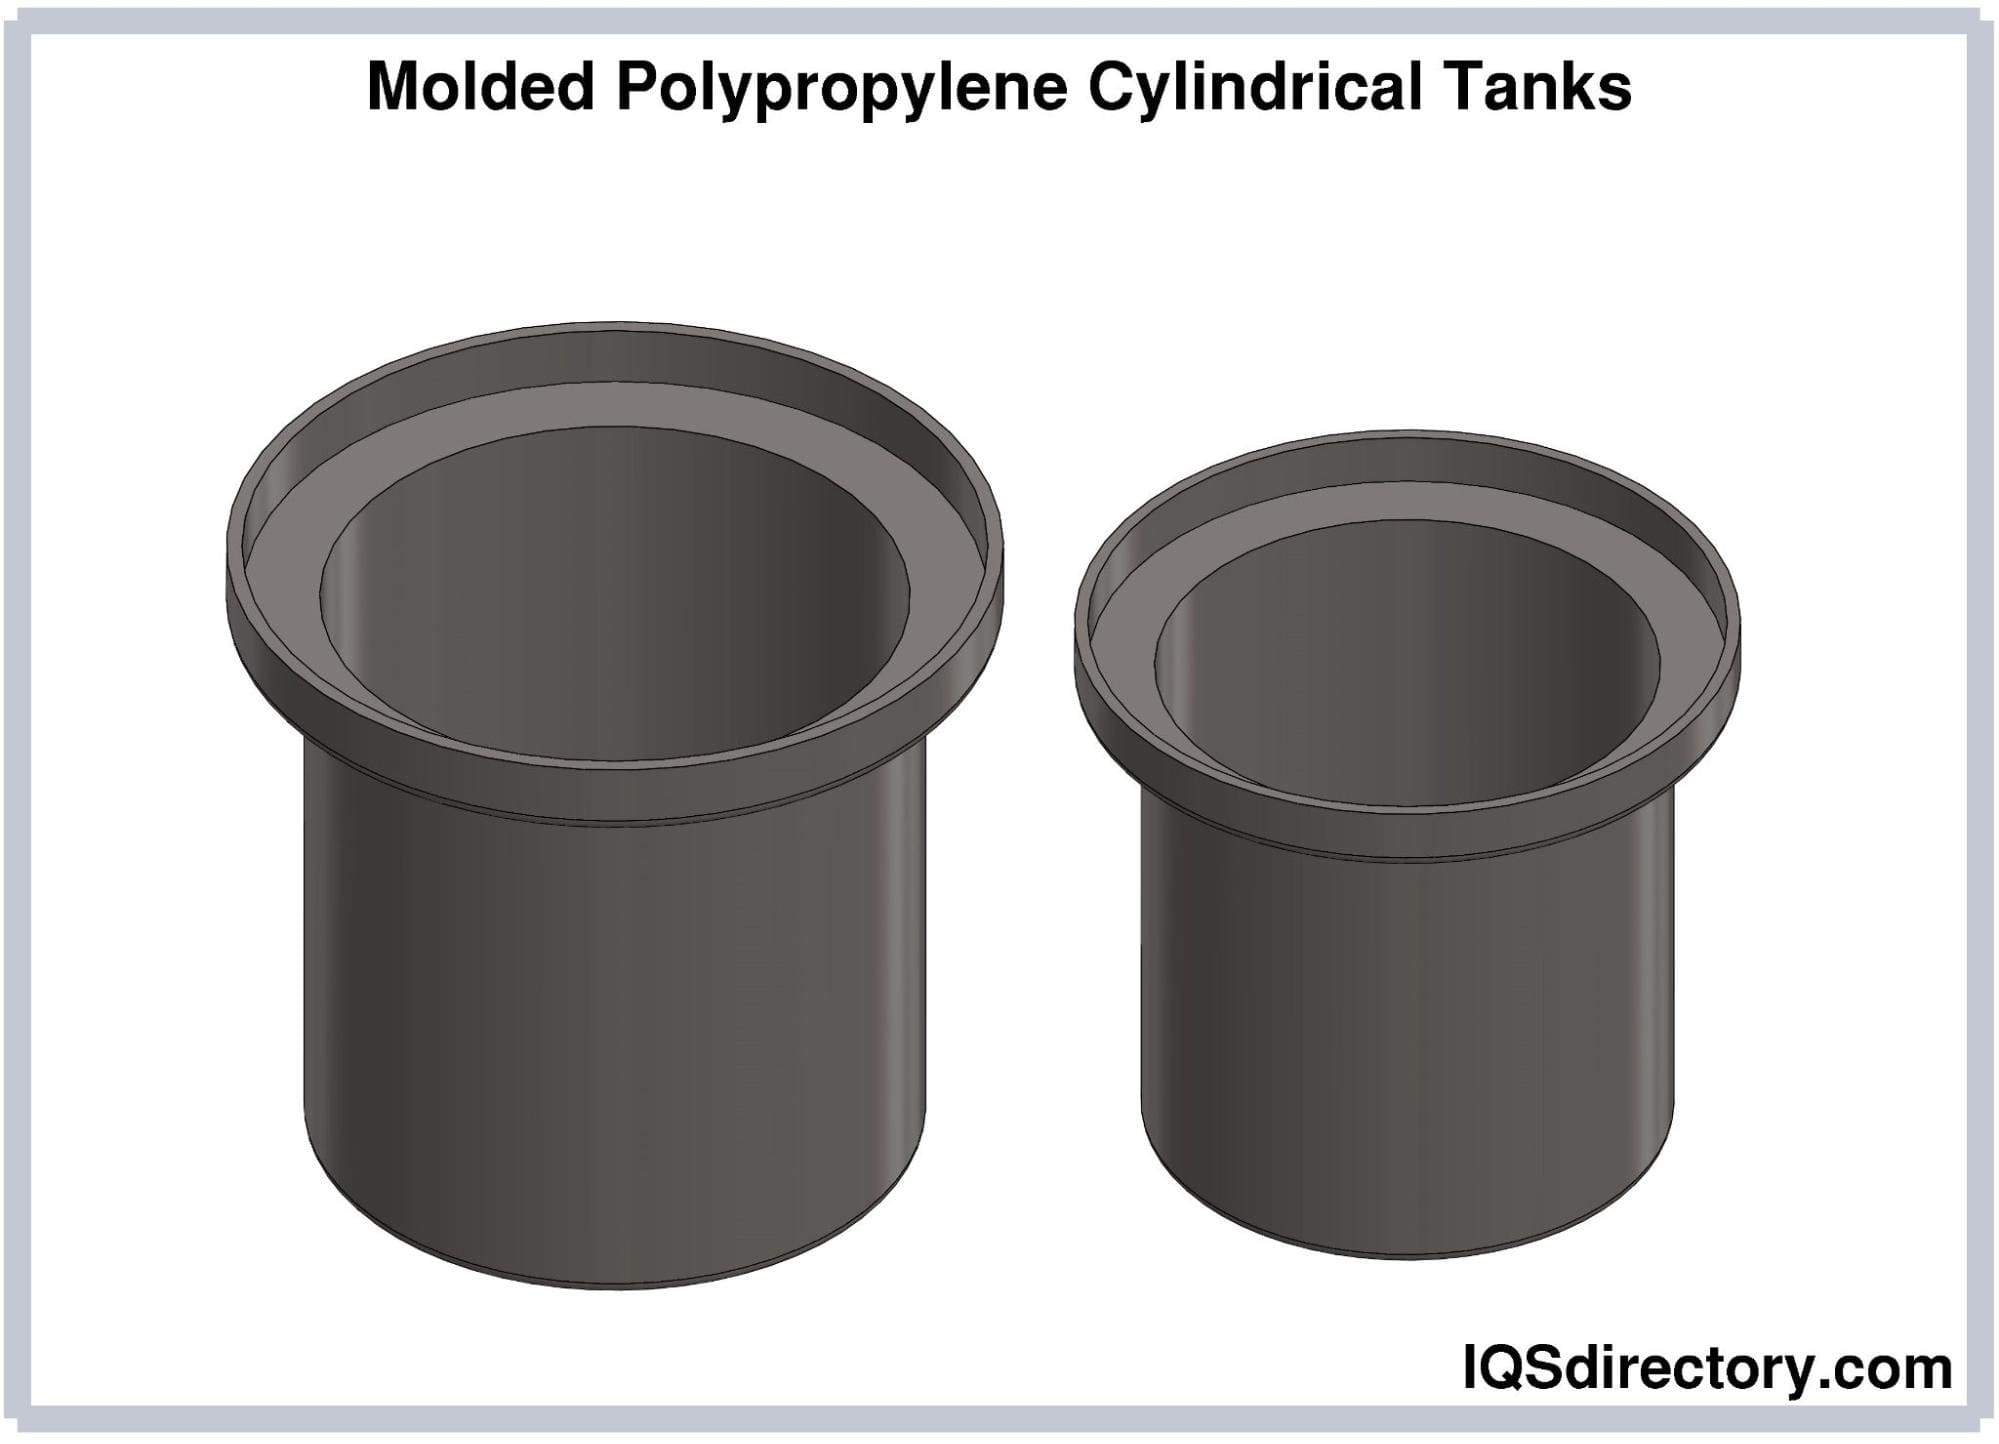 Molded Polypropylene Cylindrical Tanks